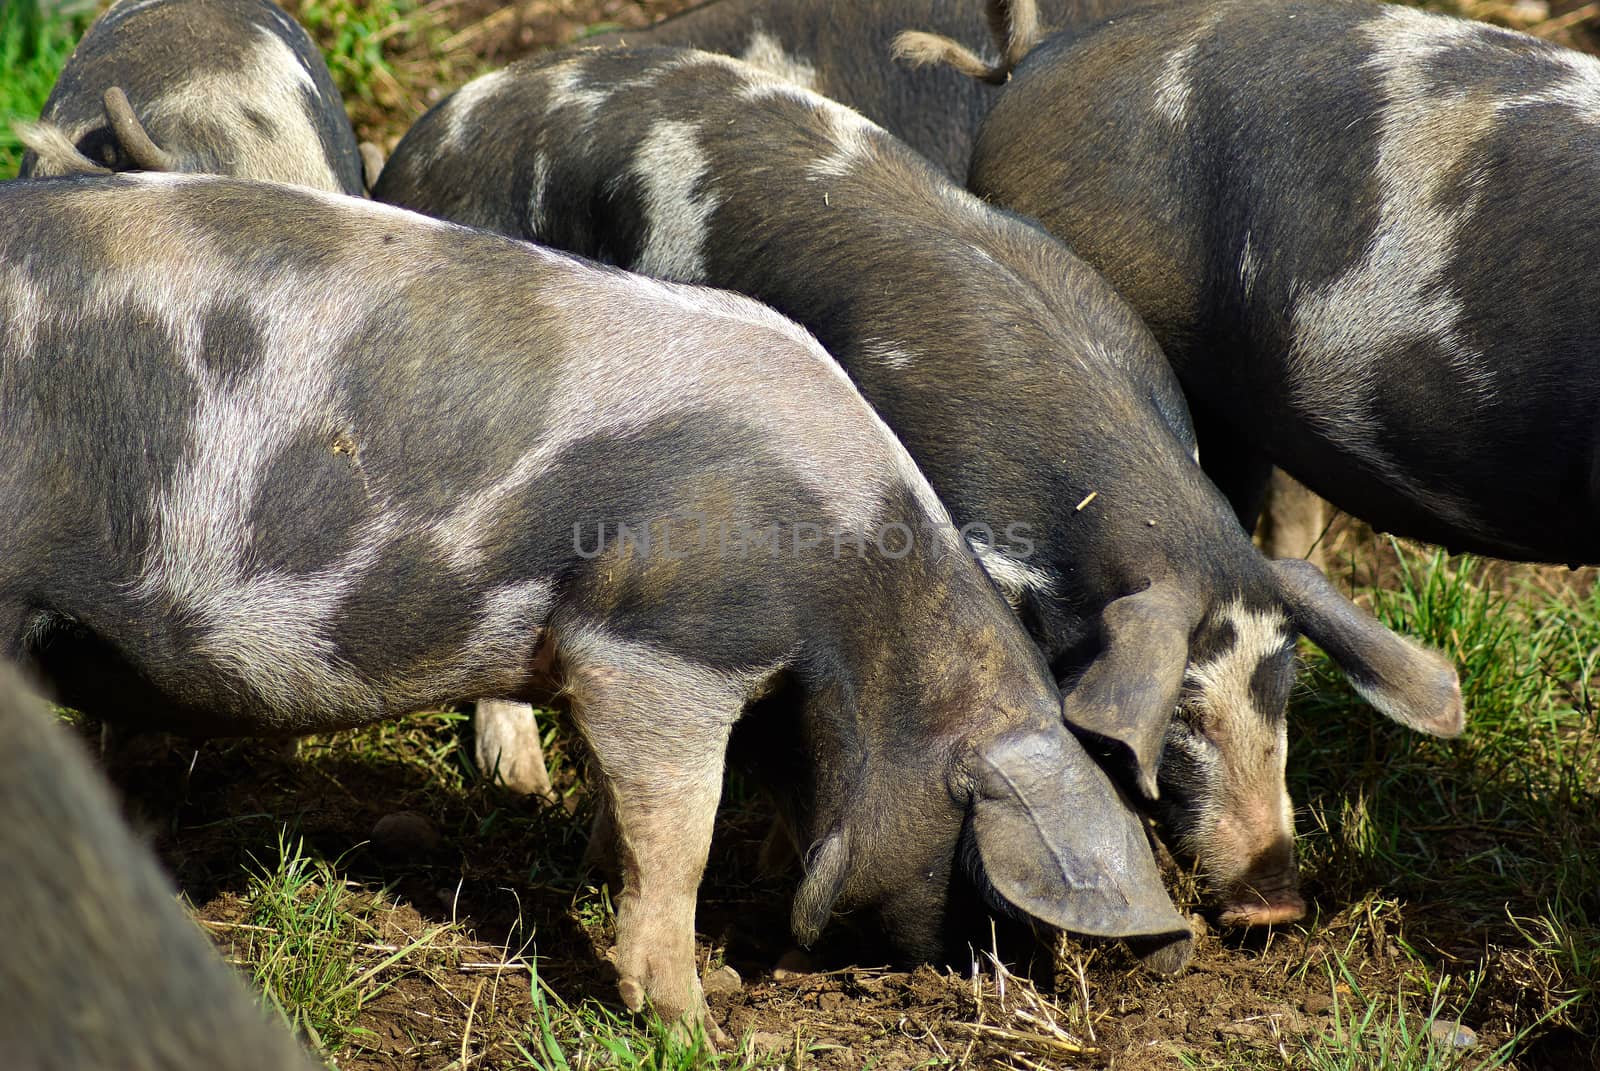 Free range pigs grazing in an organic ecological farm